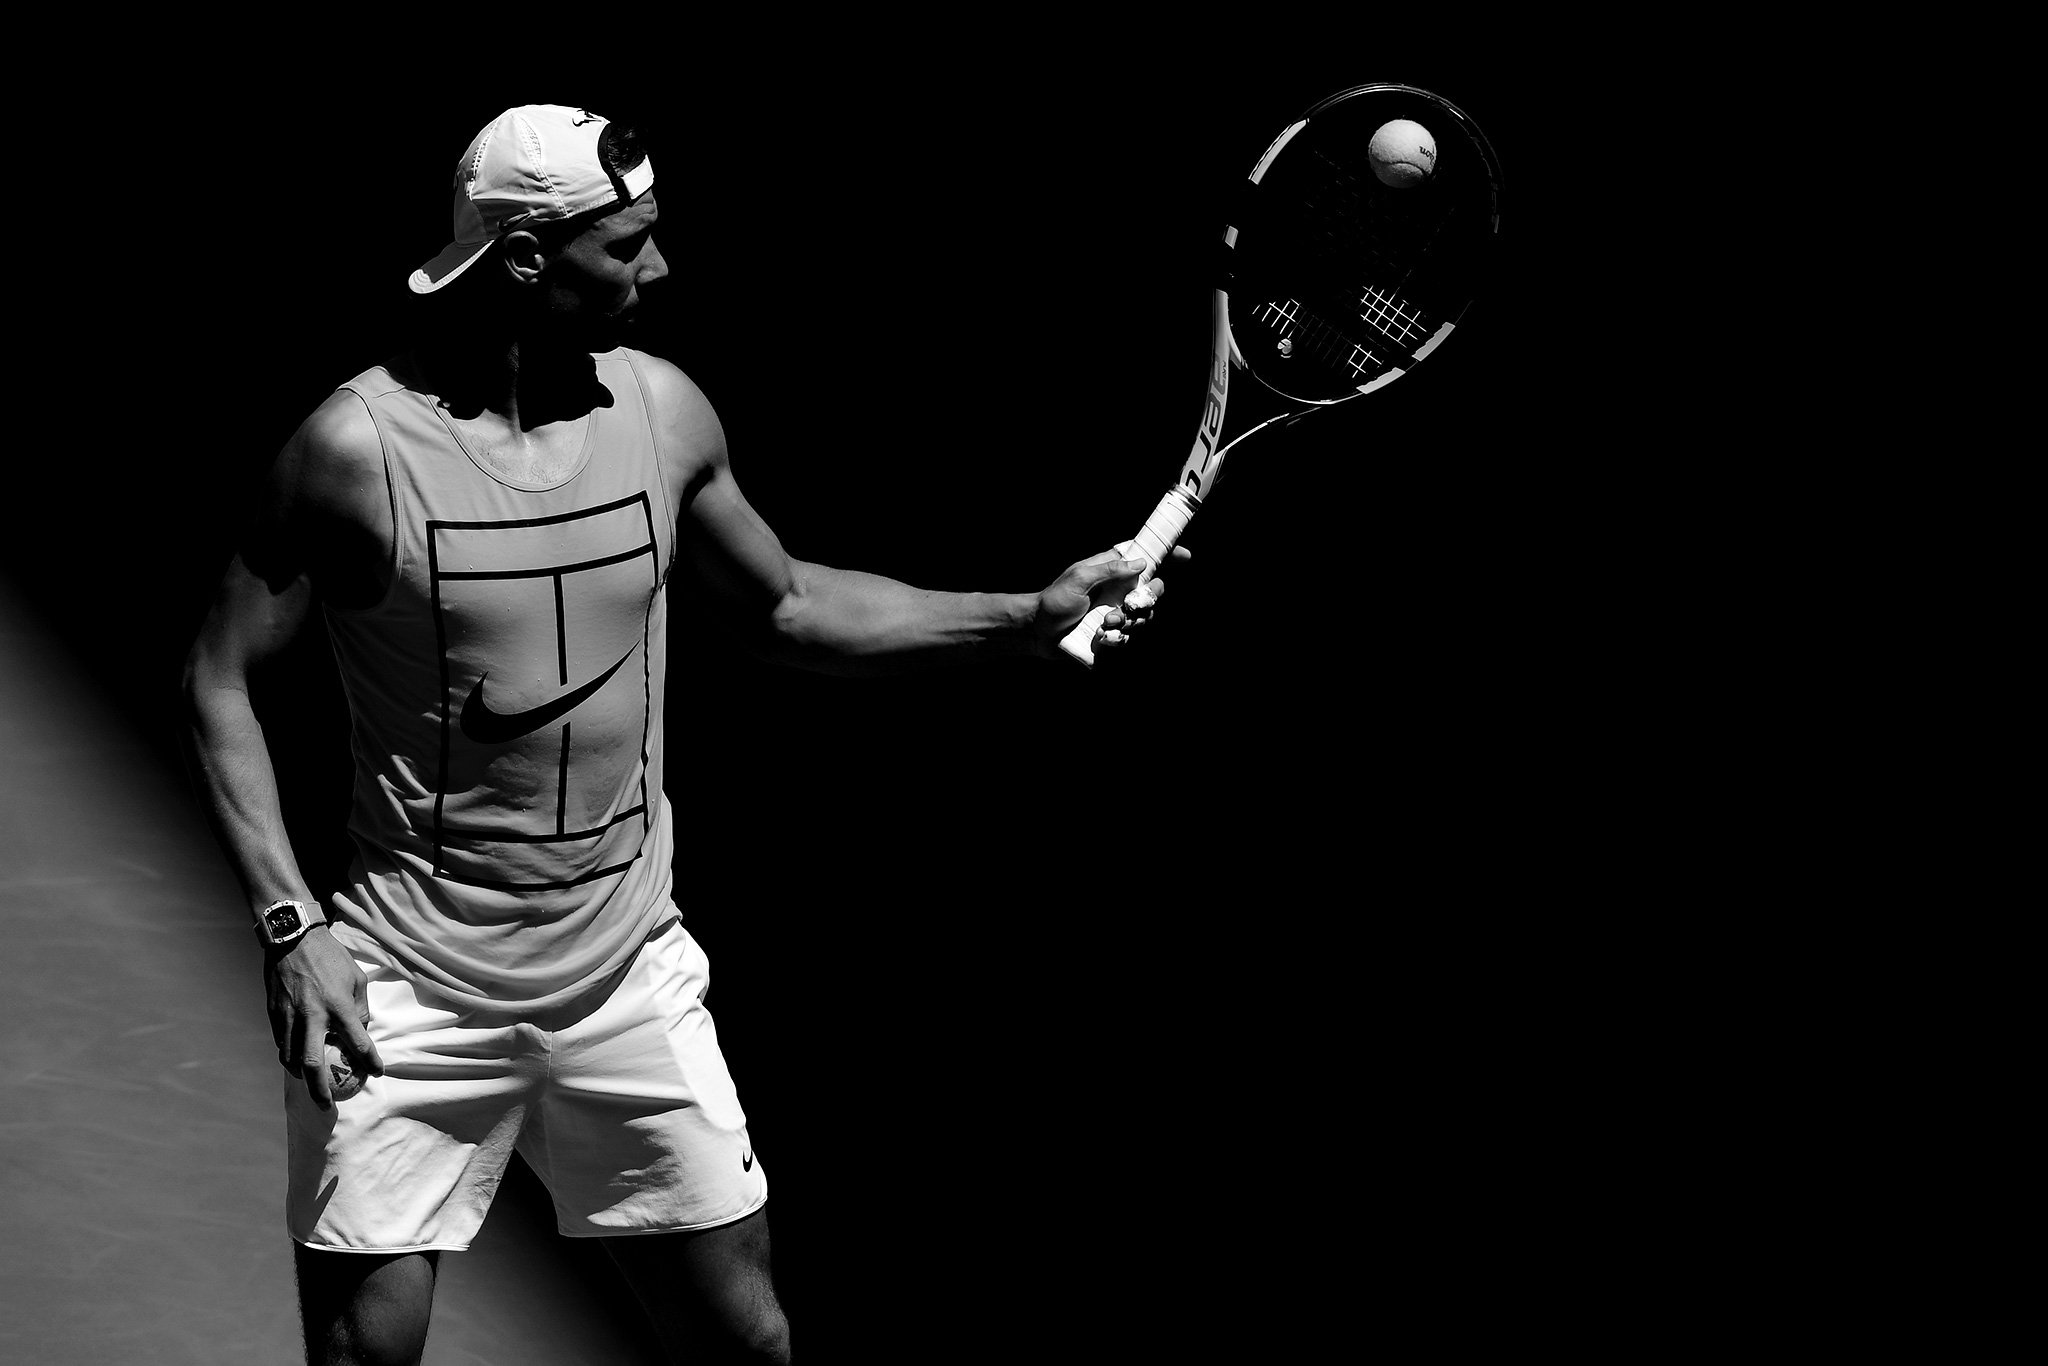 2017 Australian Open Draw: Rafael Nadal and Milos Raonic the same quarter – Rafael Nadal Fans